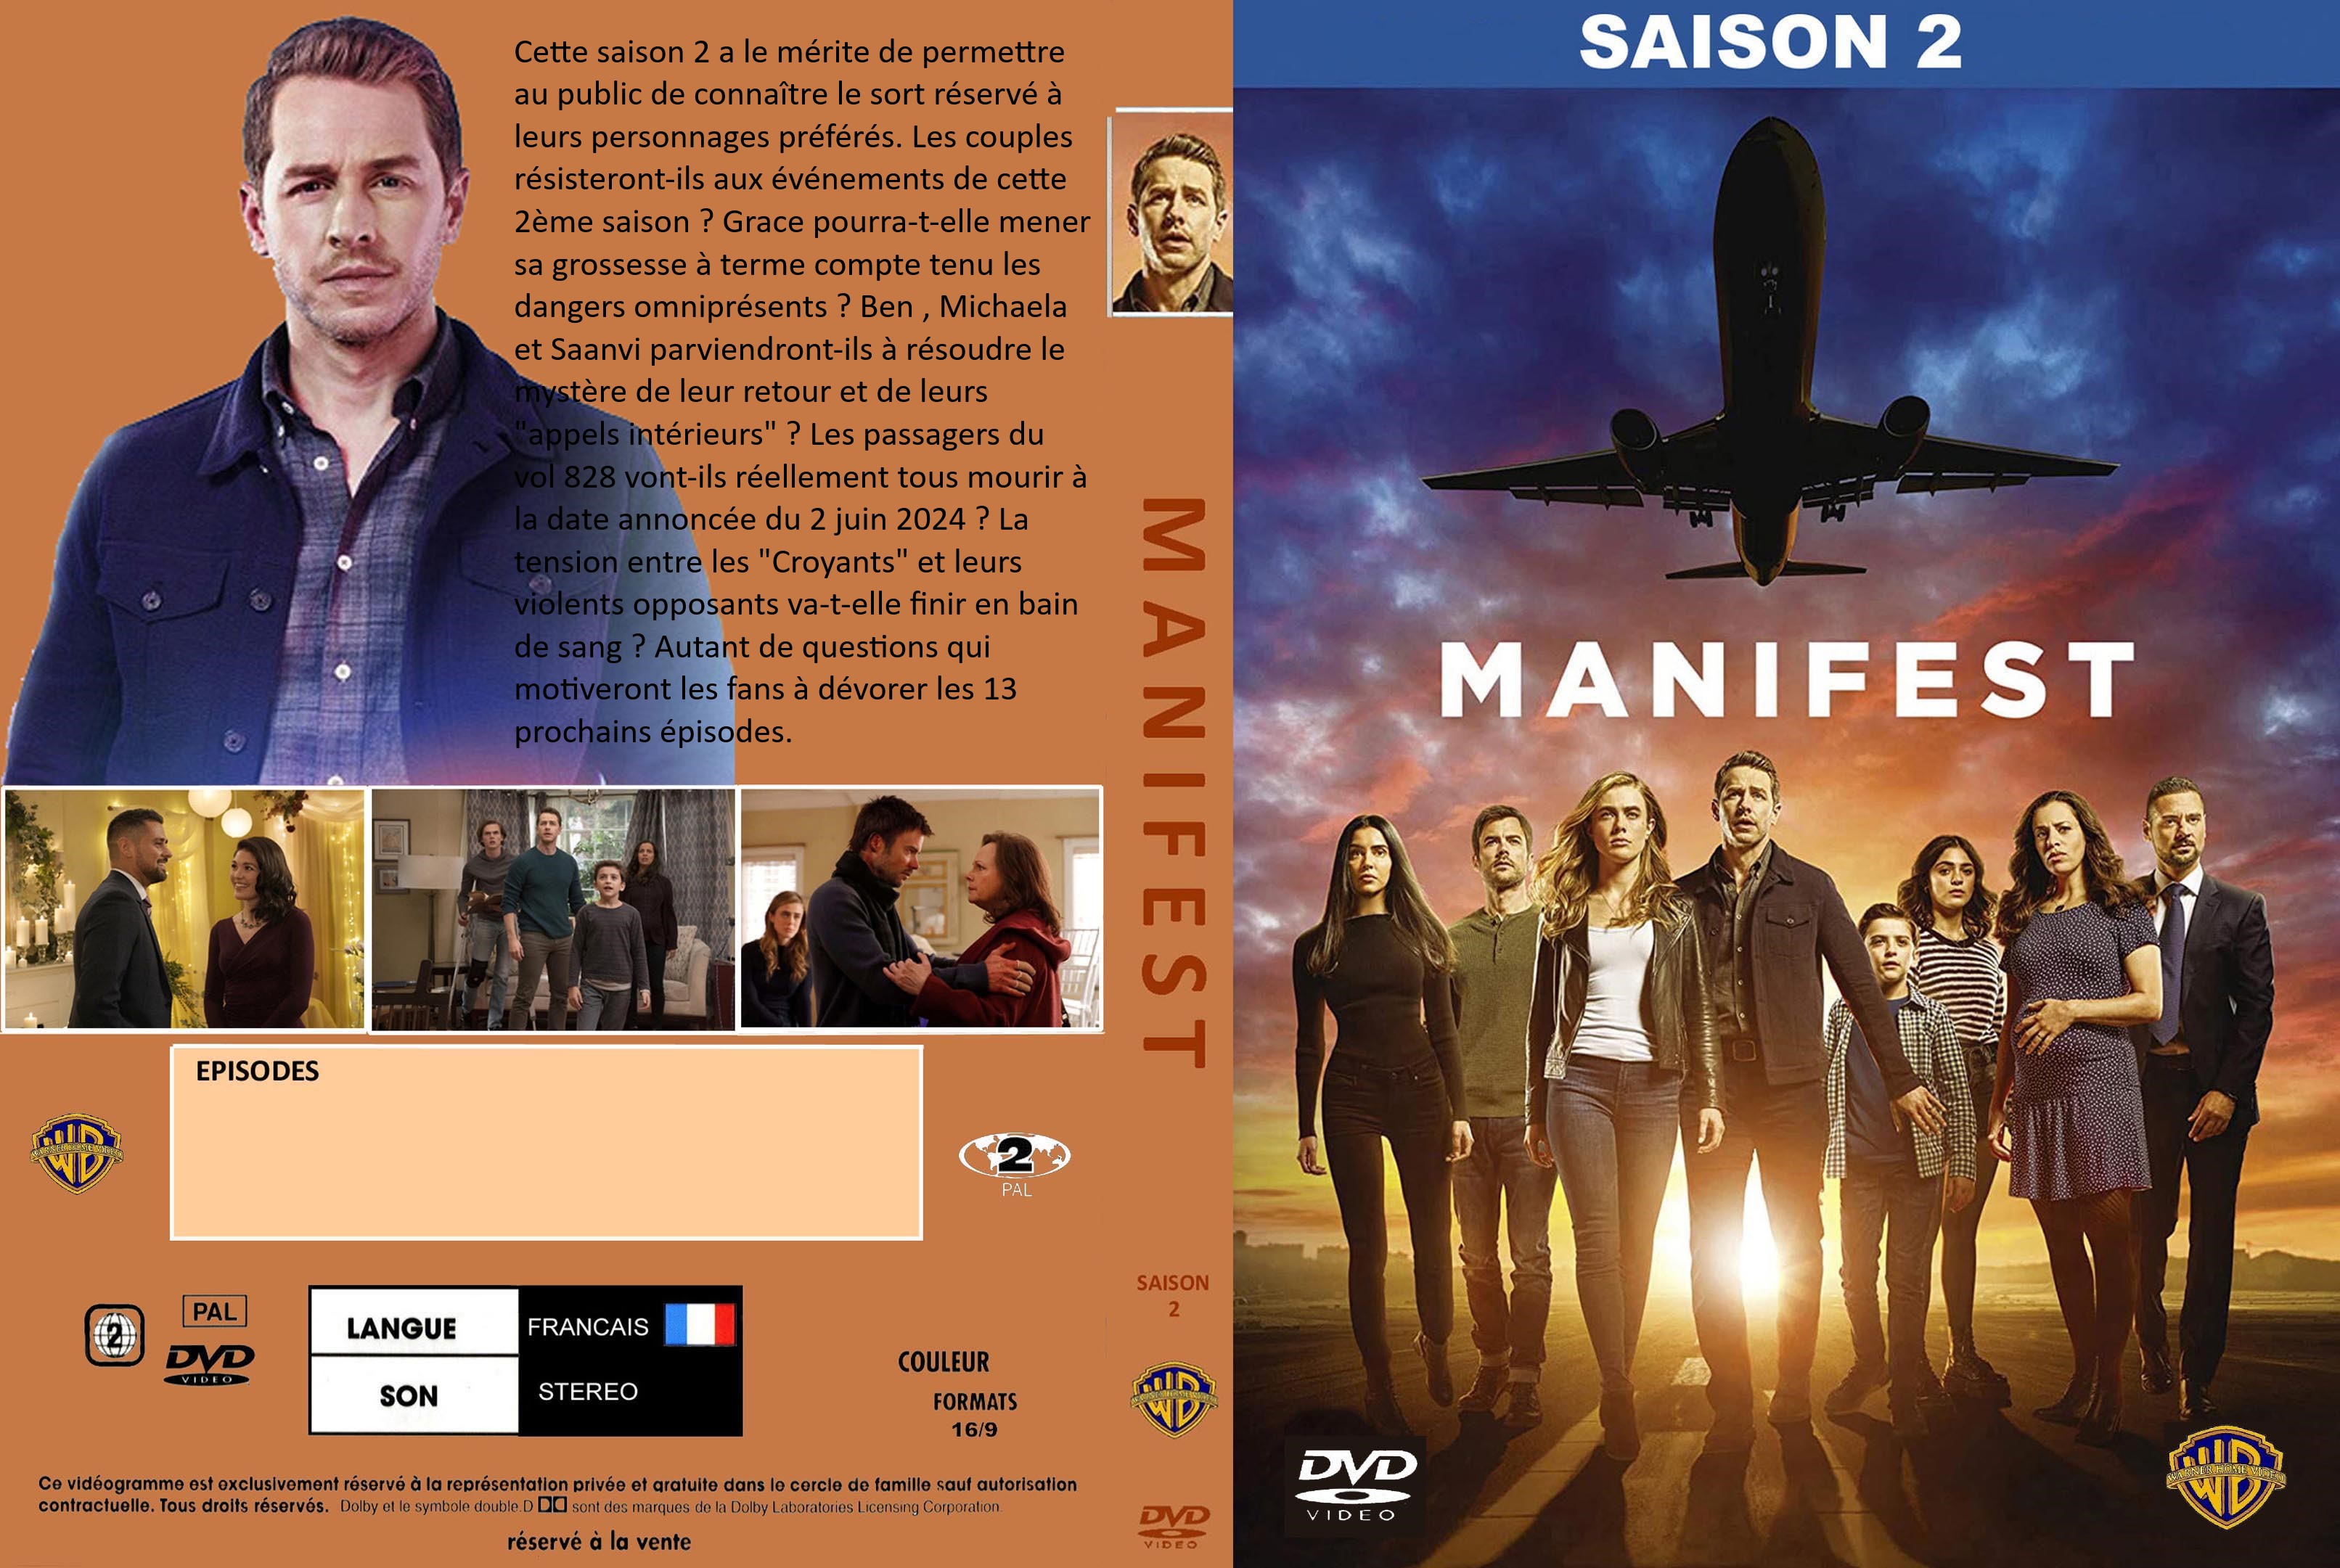 Jaquette DVD Manifest Saison 2 custom